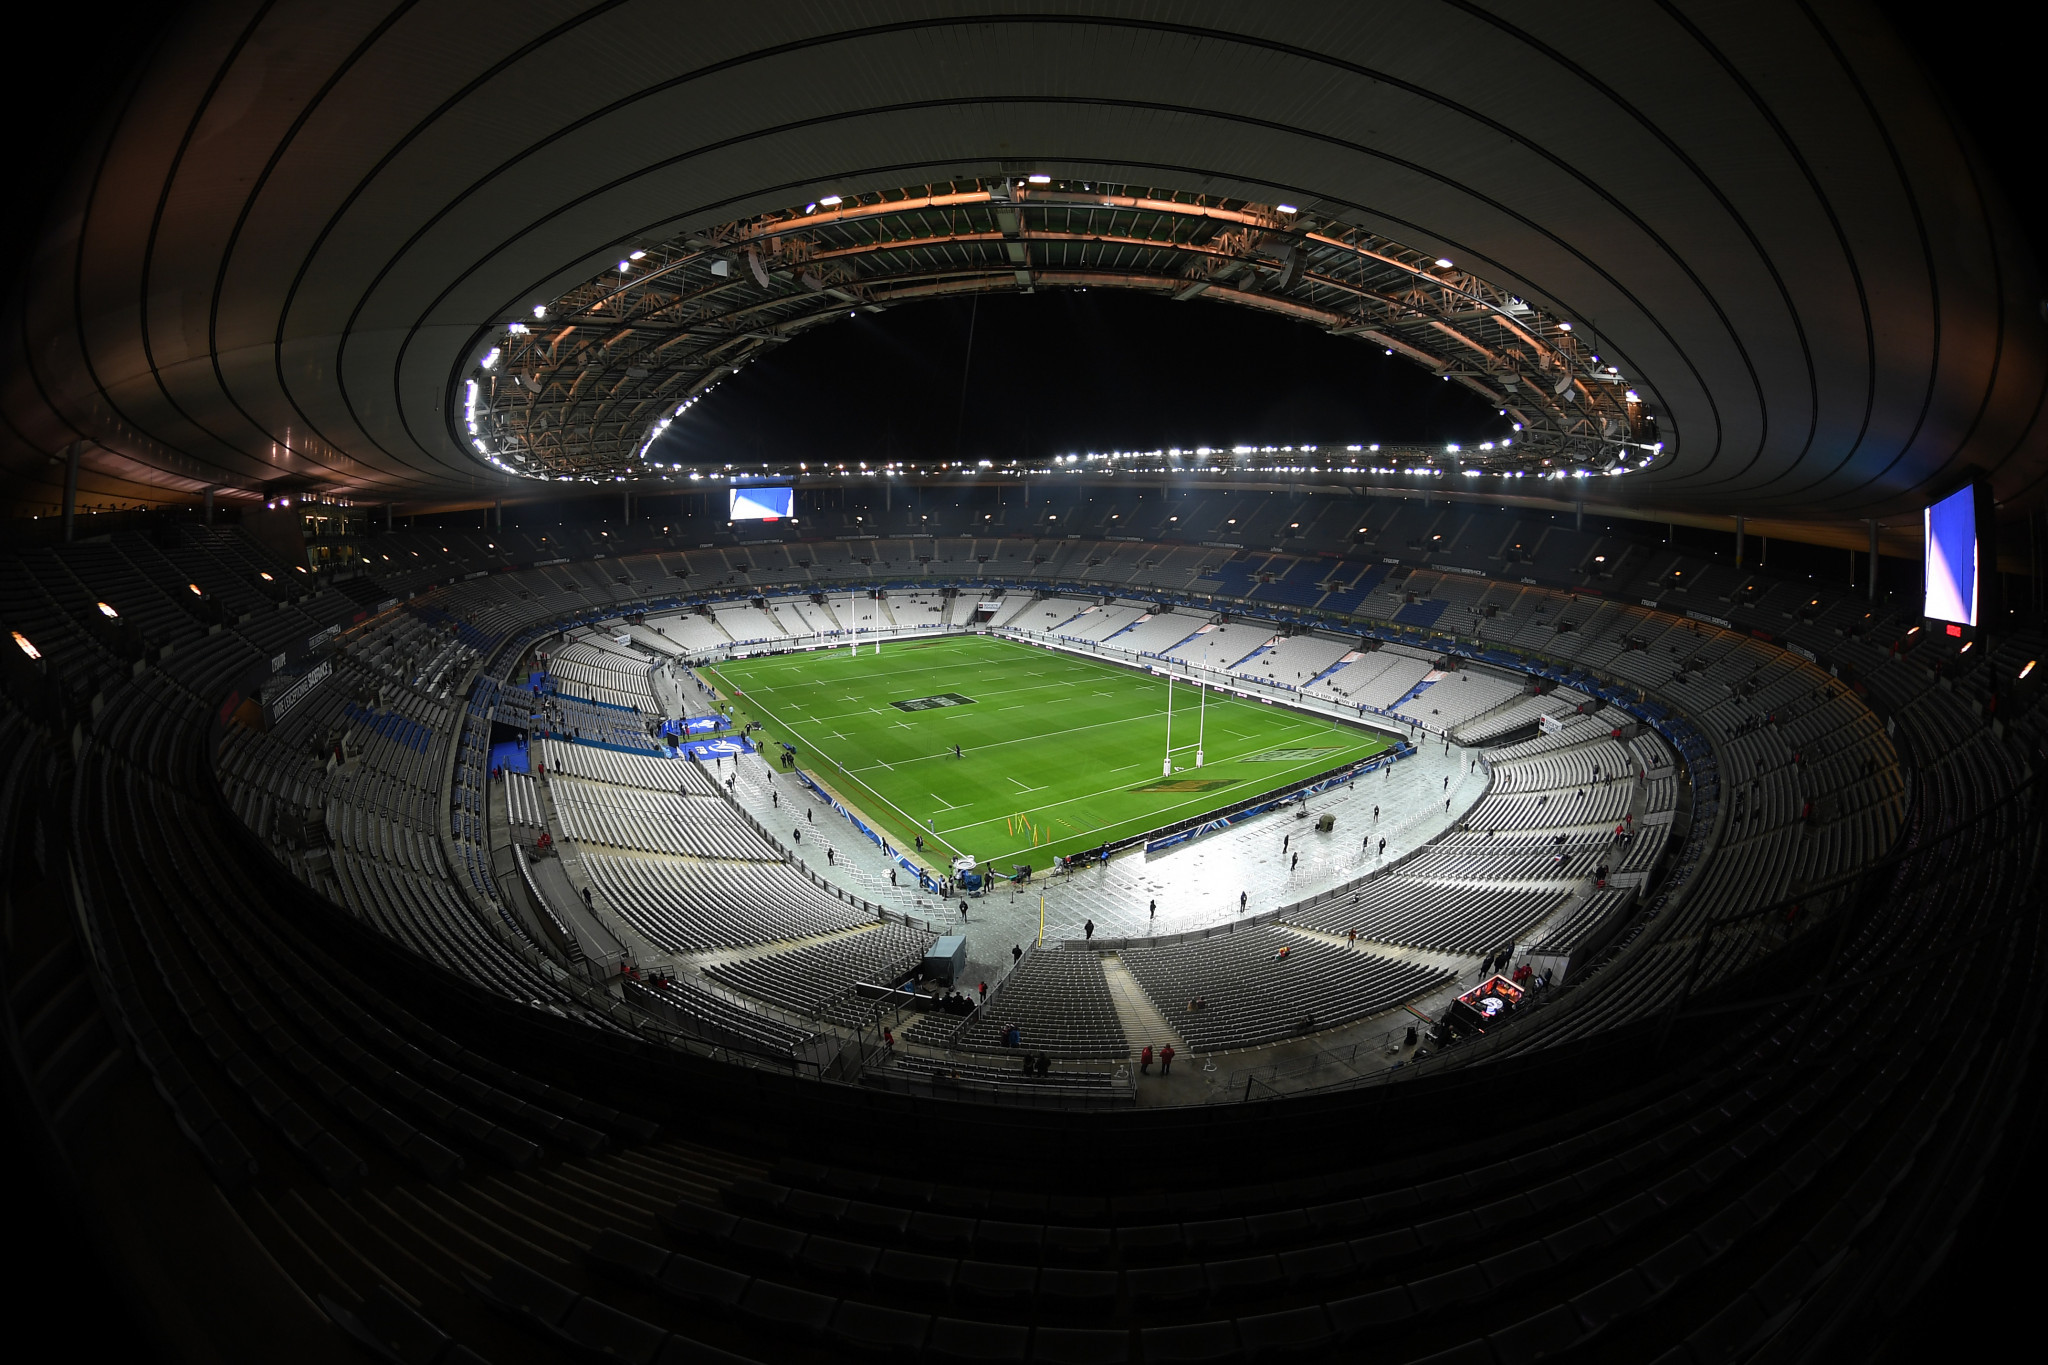 The central Paris 2024 venue, the Stade de France, is located in Seine-Saint-Denis ©Getty Images